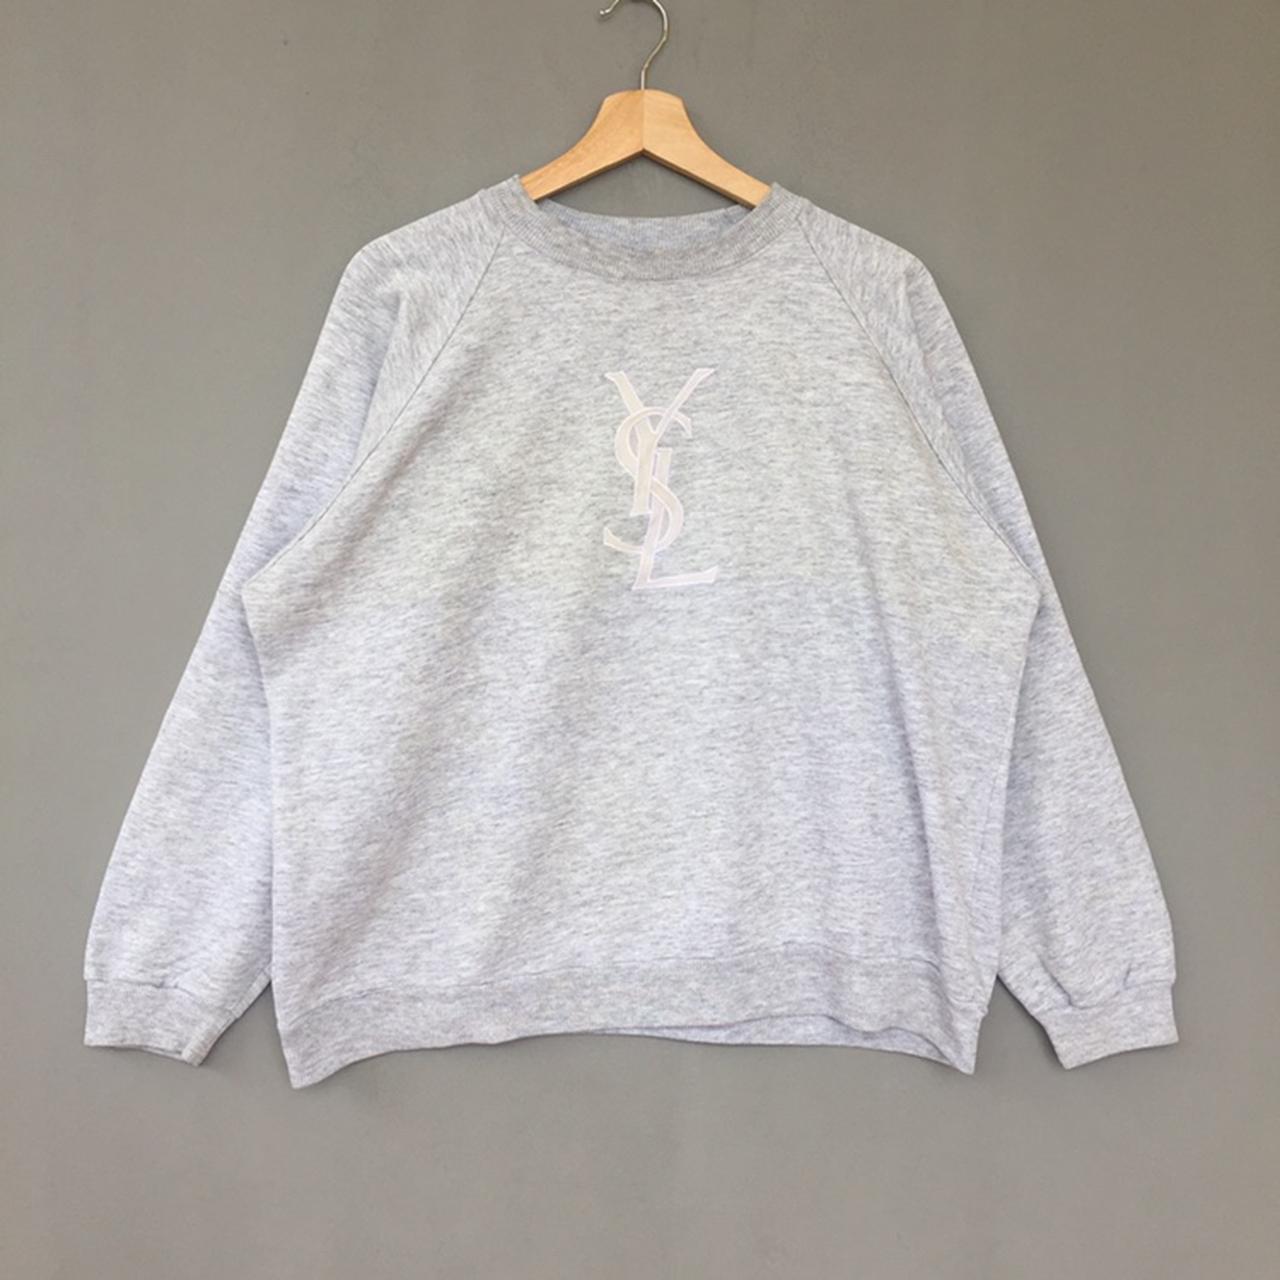 Yves saint Laurent Sweatshirt embroidery Logo... - Depop